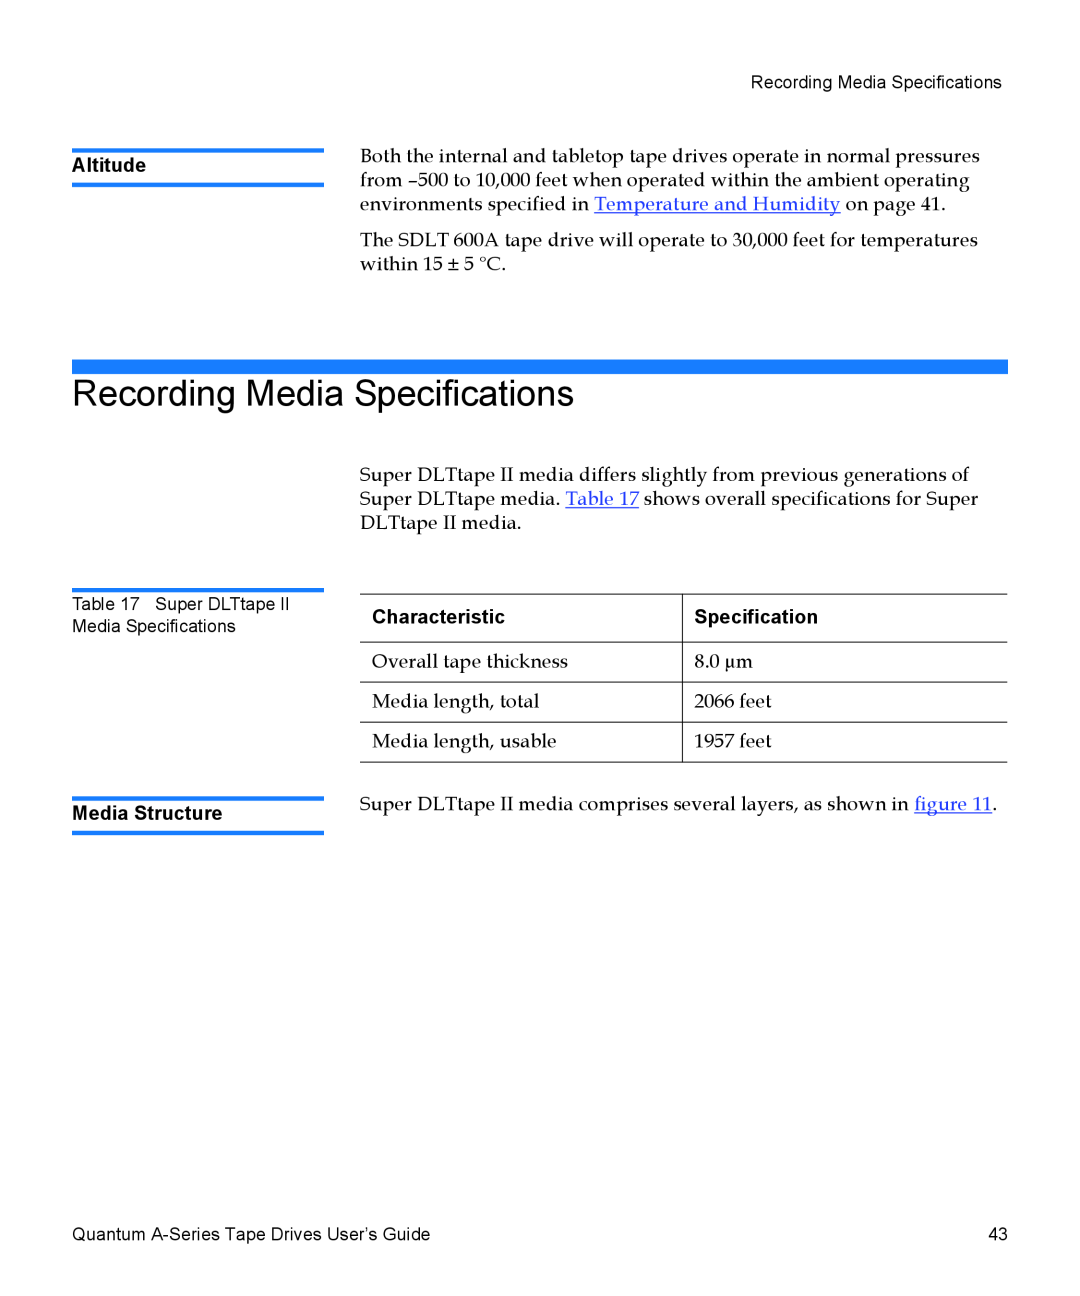 Quantum A-Series manual Recording Media Specifications 